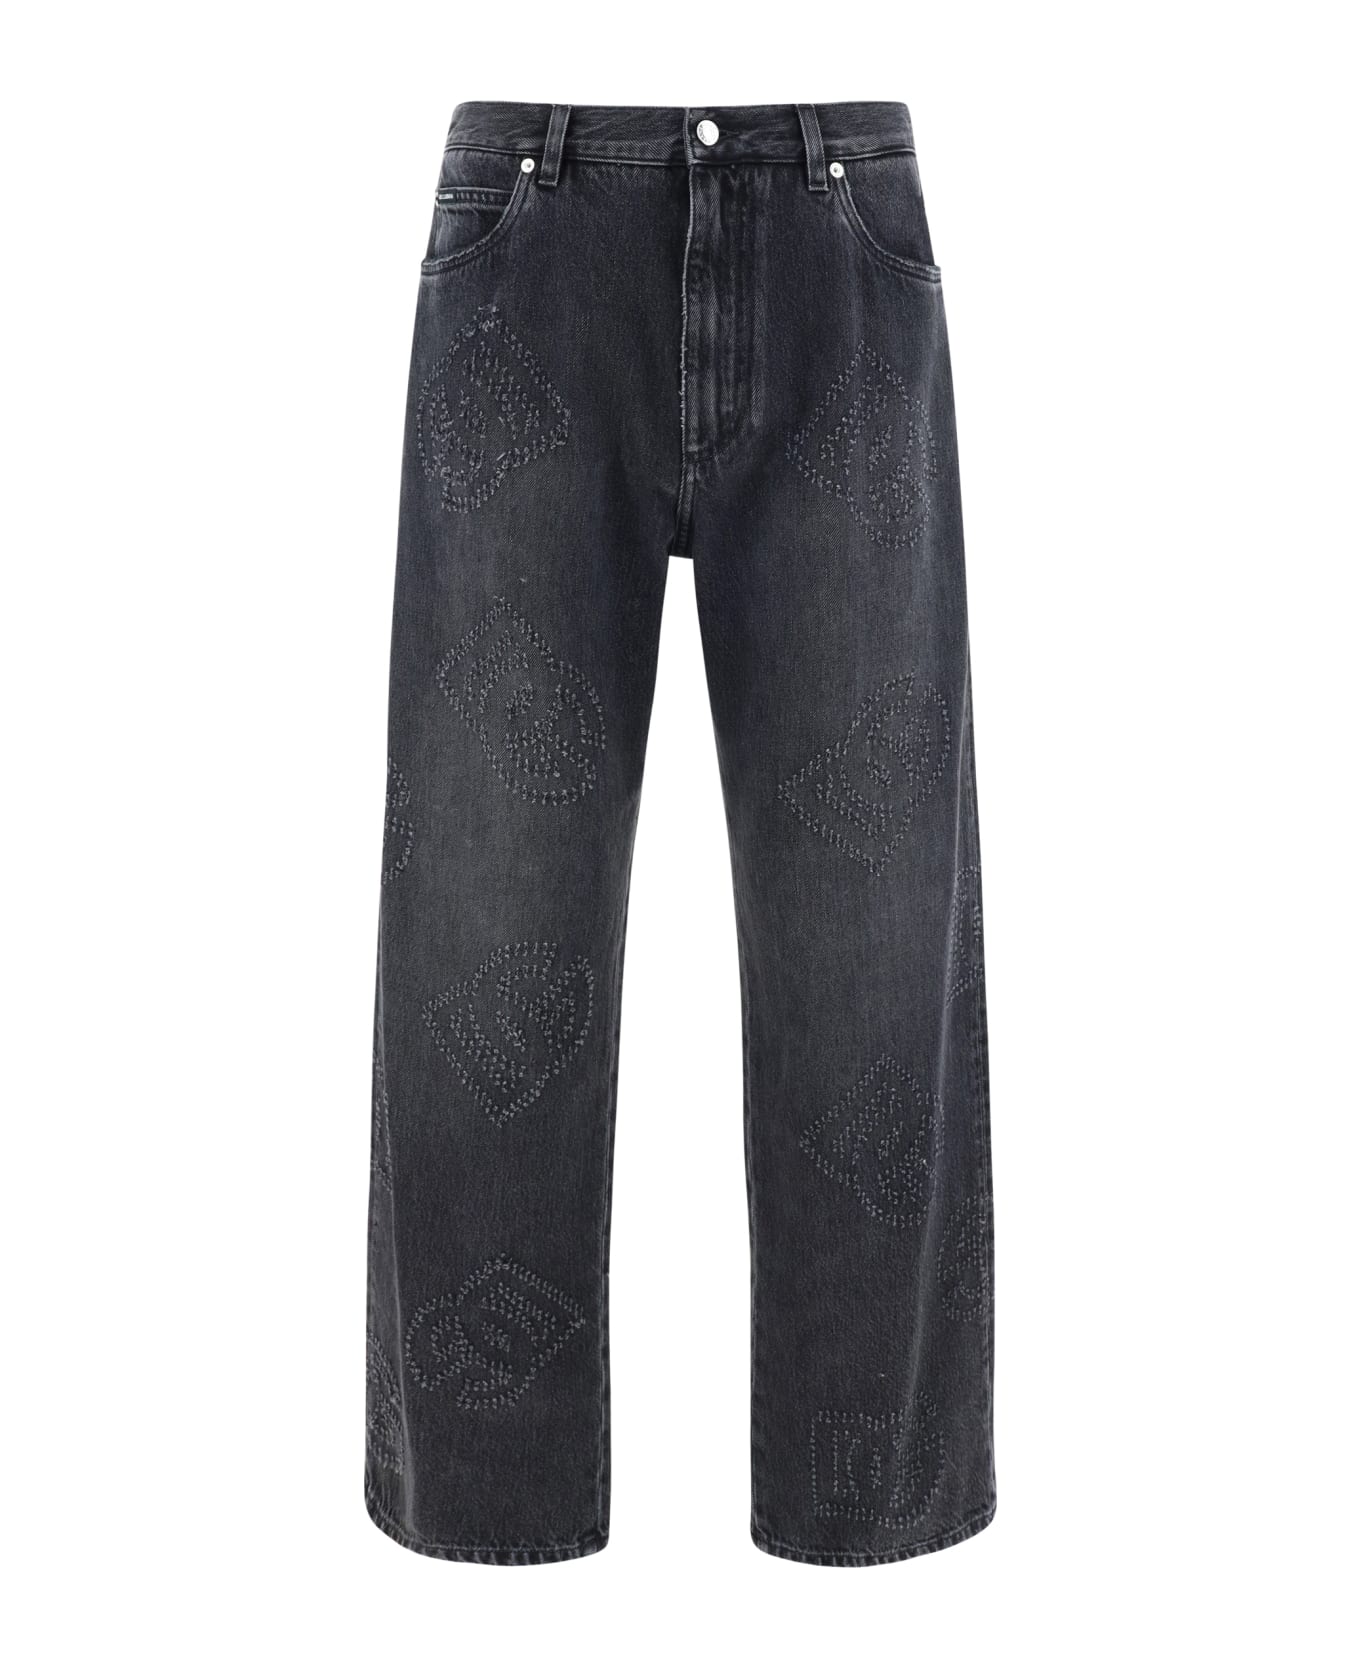 Dolce & Gabbana Dg Jeans - Variante Abbinata ボトムス